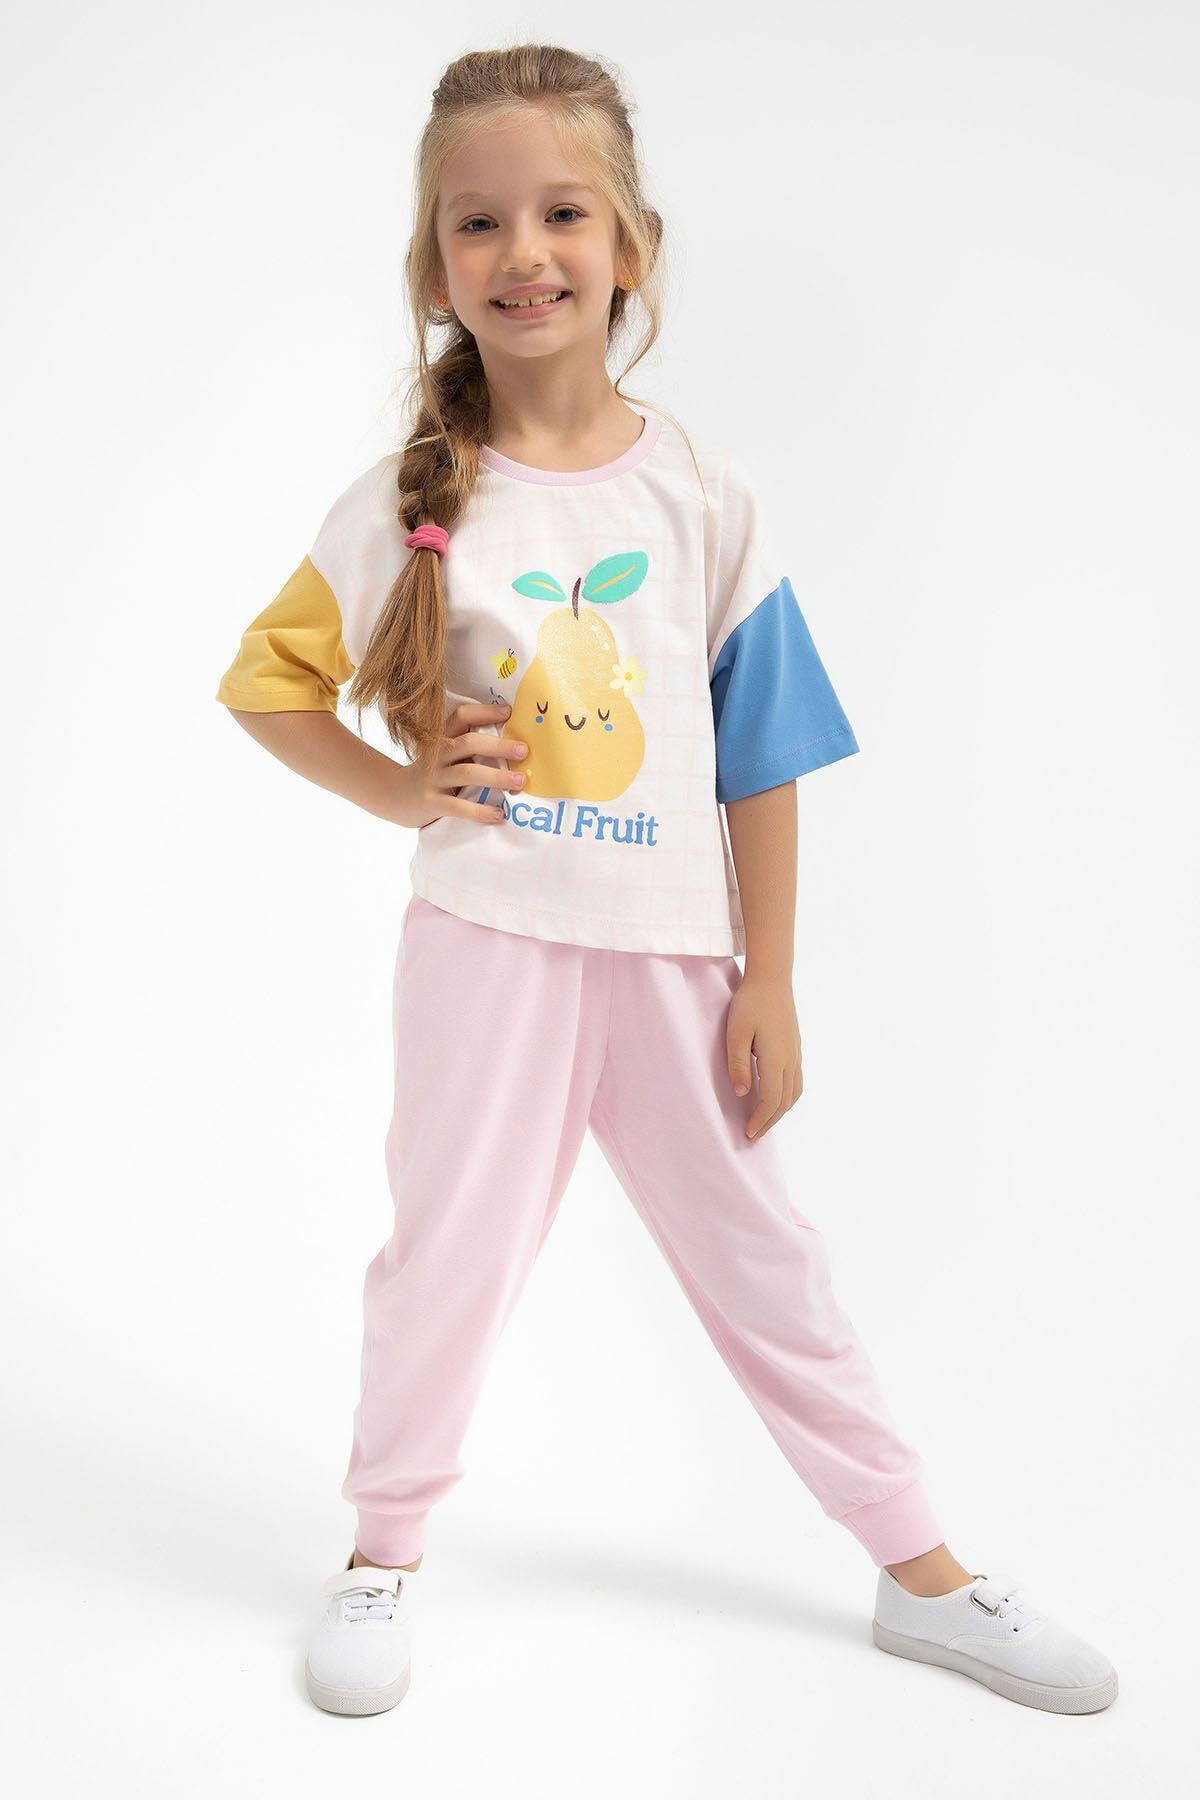 Rolypoly Local Fruit Kız Çocuk Pijama Takımı 2755